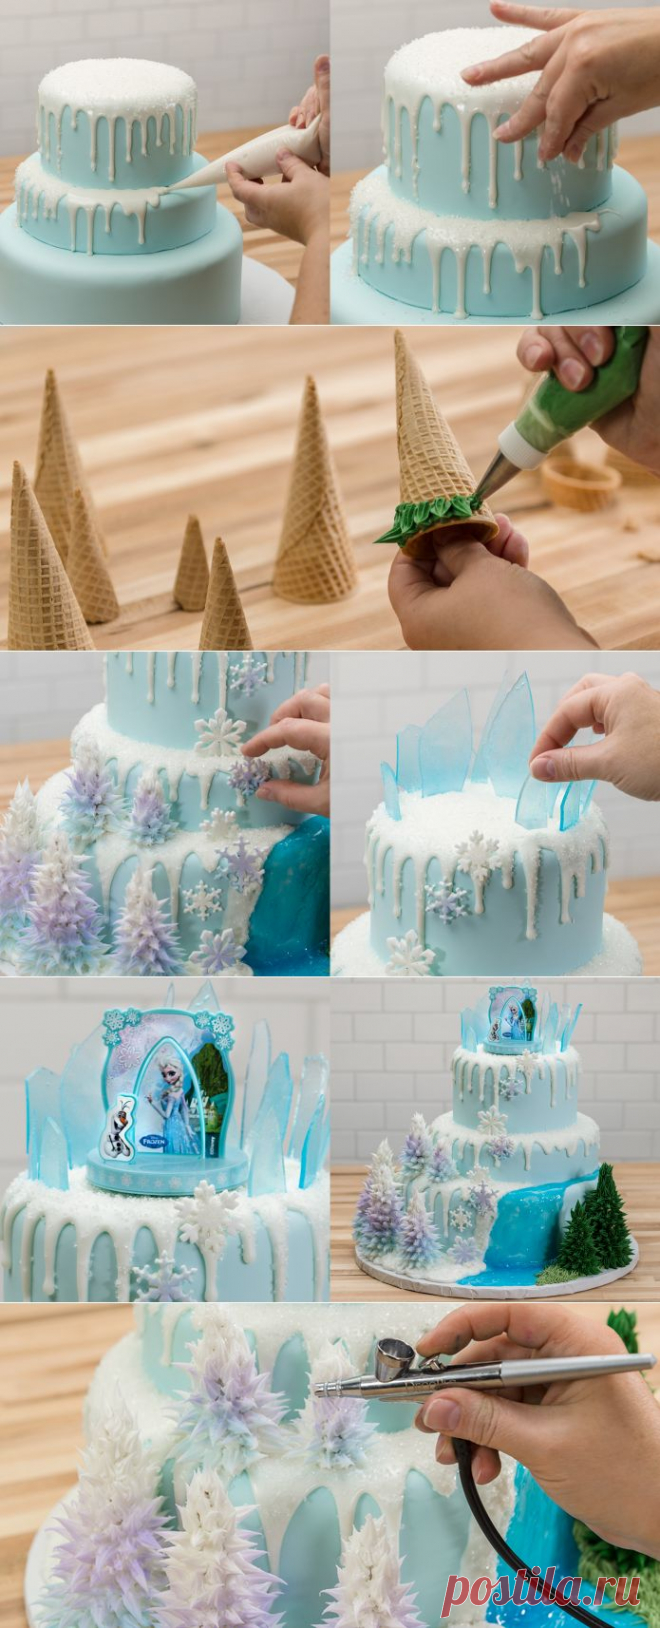 How-To Make a Three-Tier Frozen Birthday Cake - Cakes.com